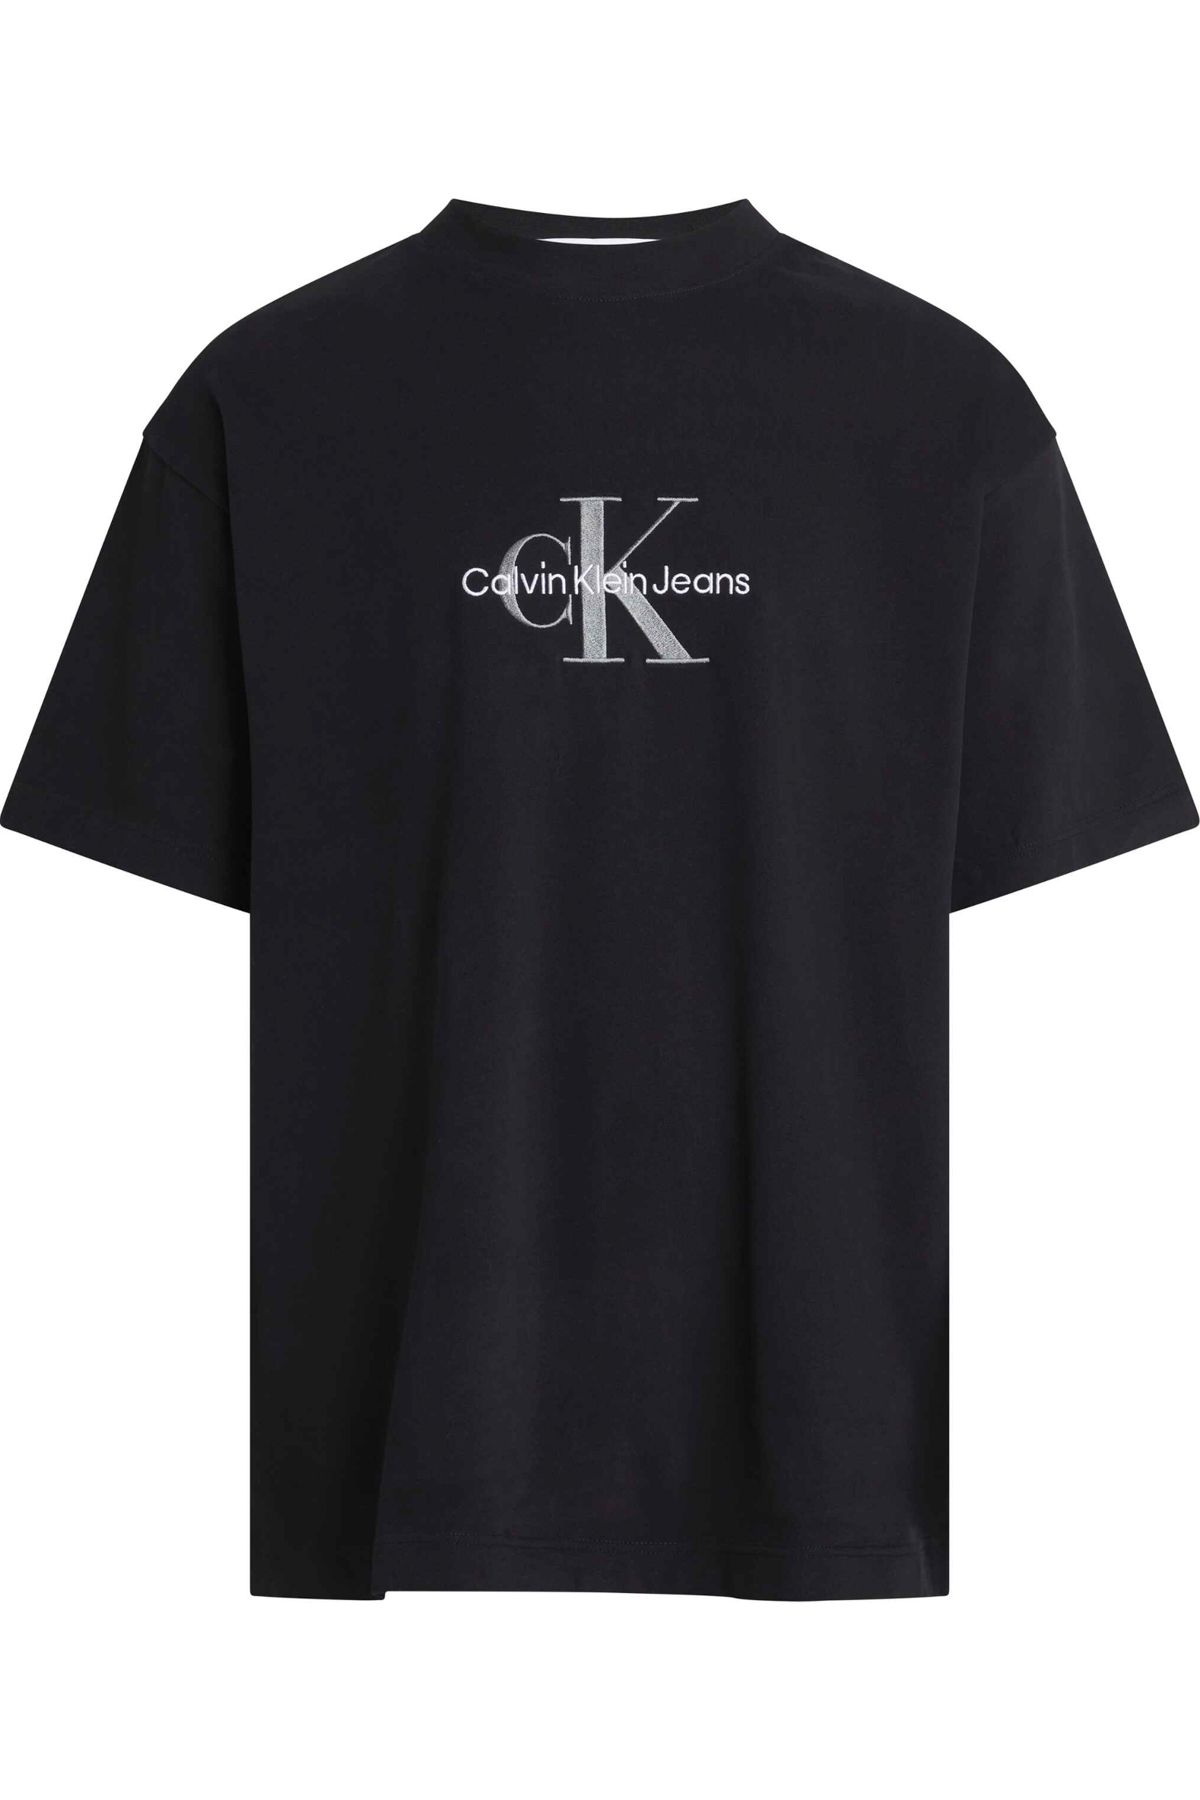 Calvin Klein T-Shirt Erkek Ck Black